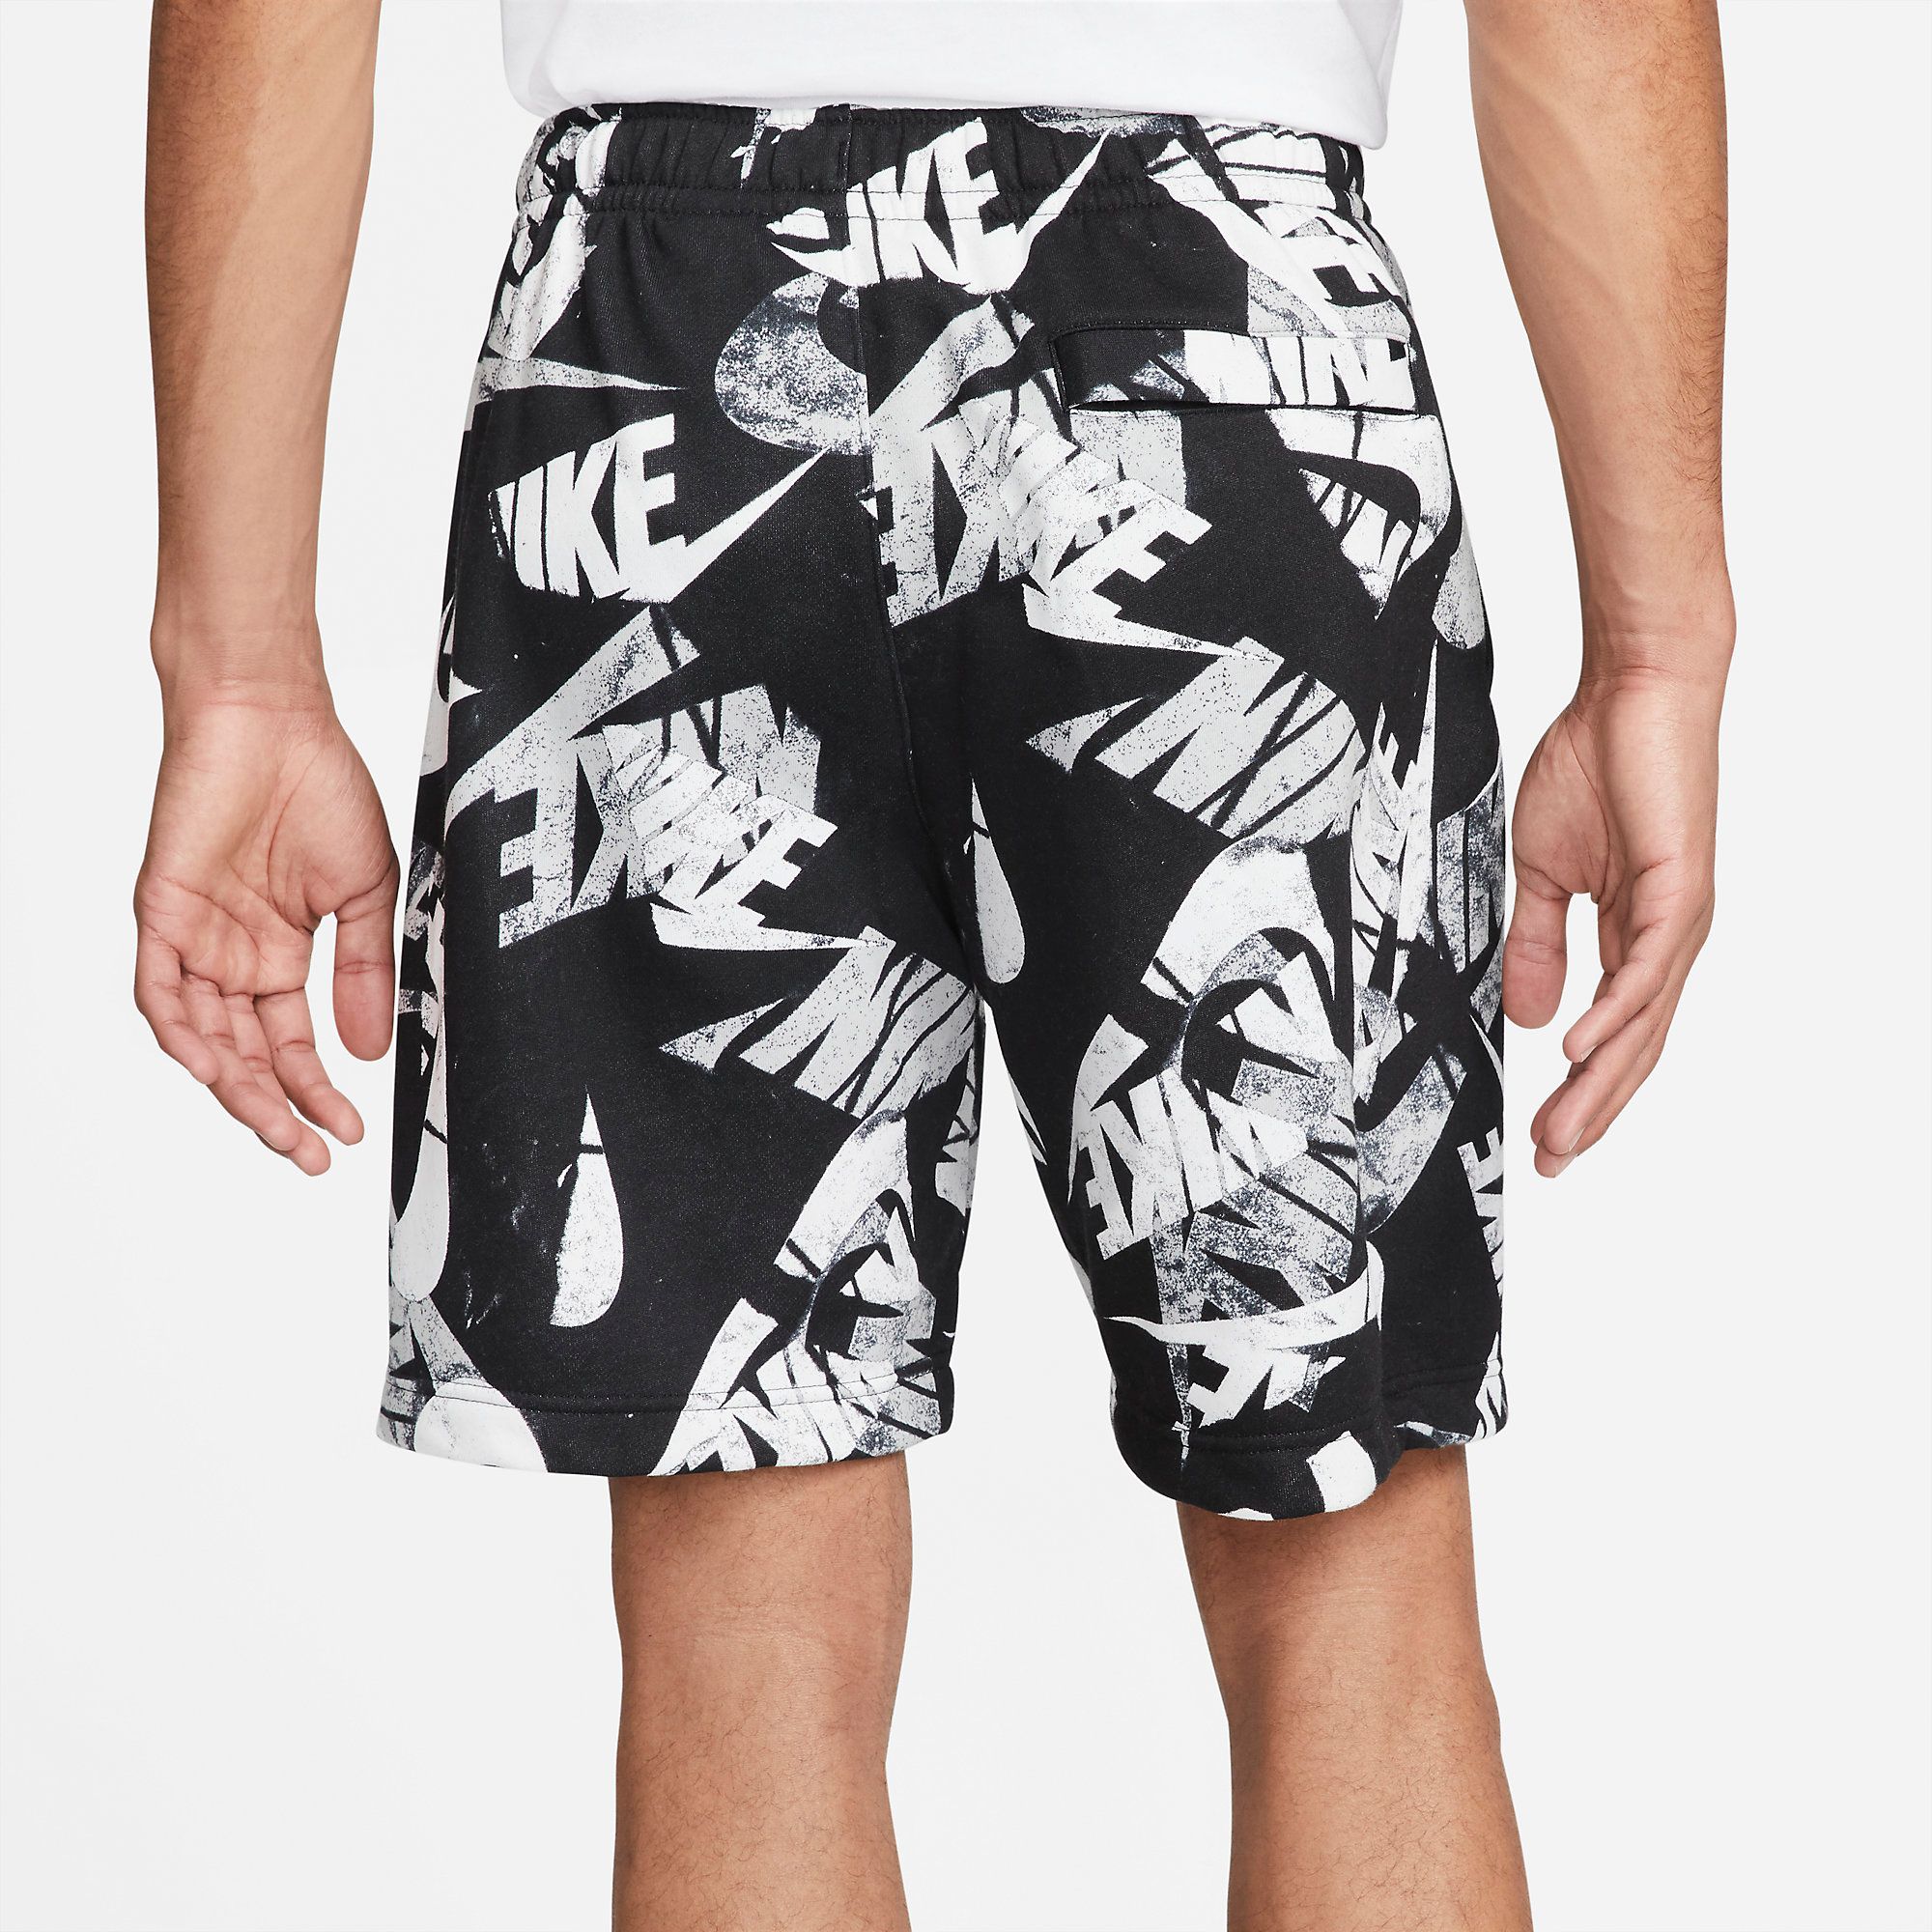  Nike Sportswear Essentials+ All-Over Print Shorts - Black 